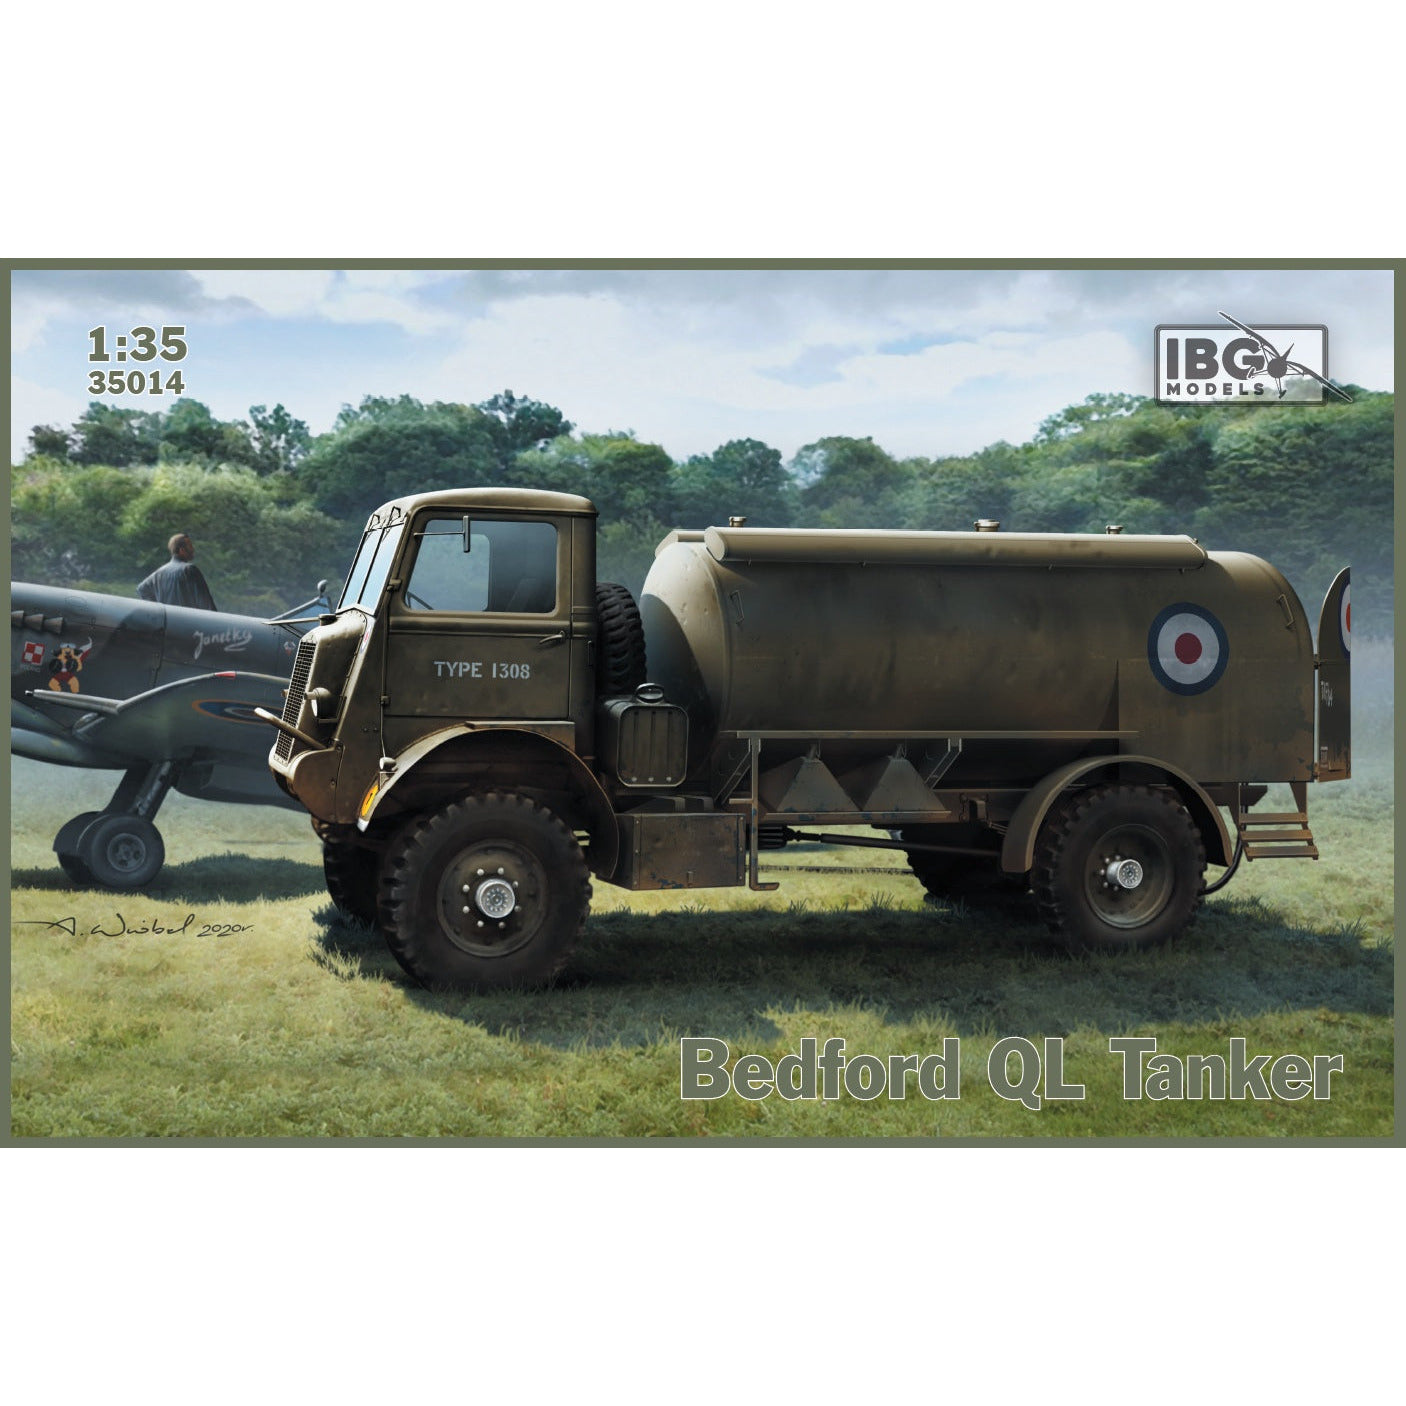 Bedford QL Petrol Tanker 1/35 #35014 by IBG Models